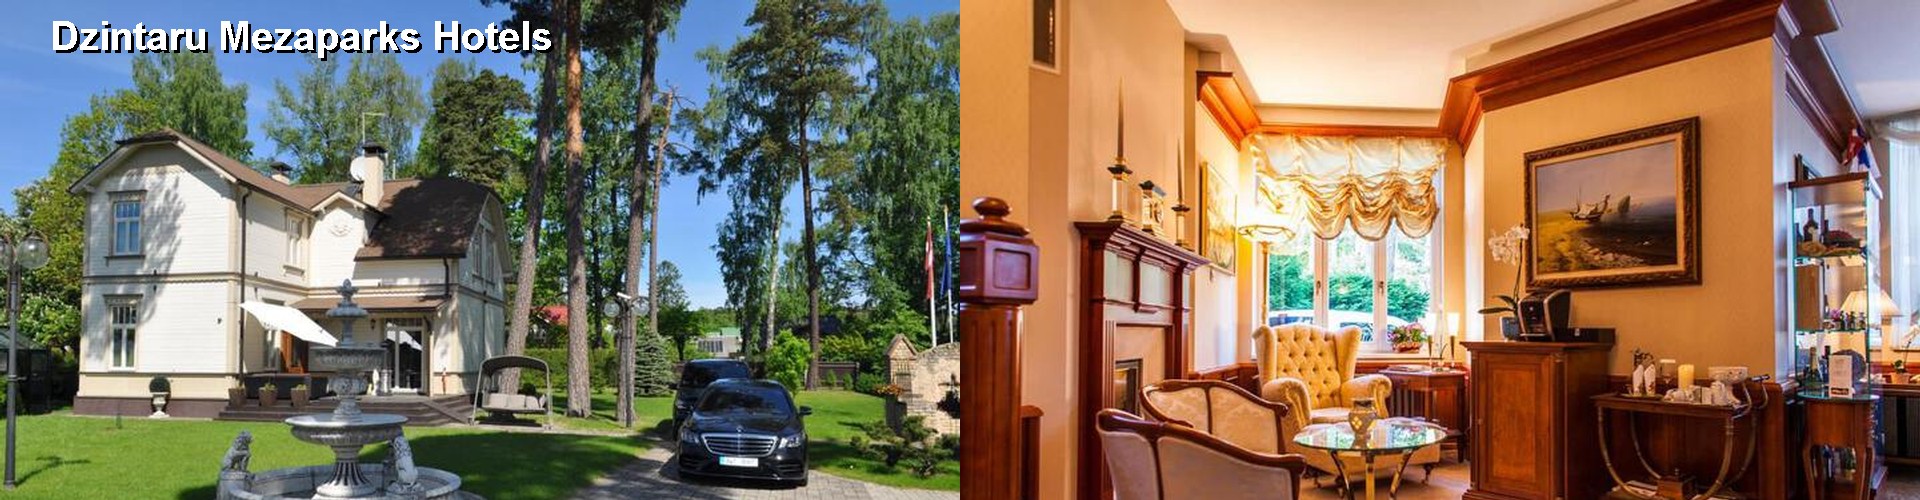 5 Best Hotels near Dzintaru Mezaparks